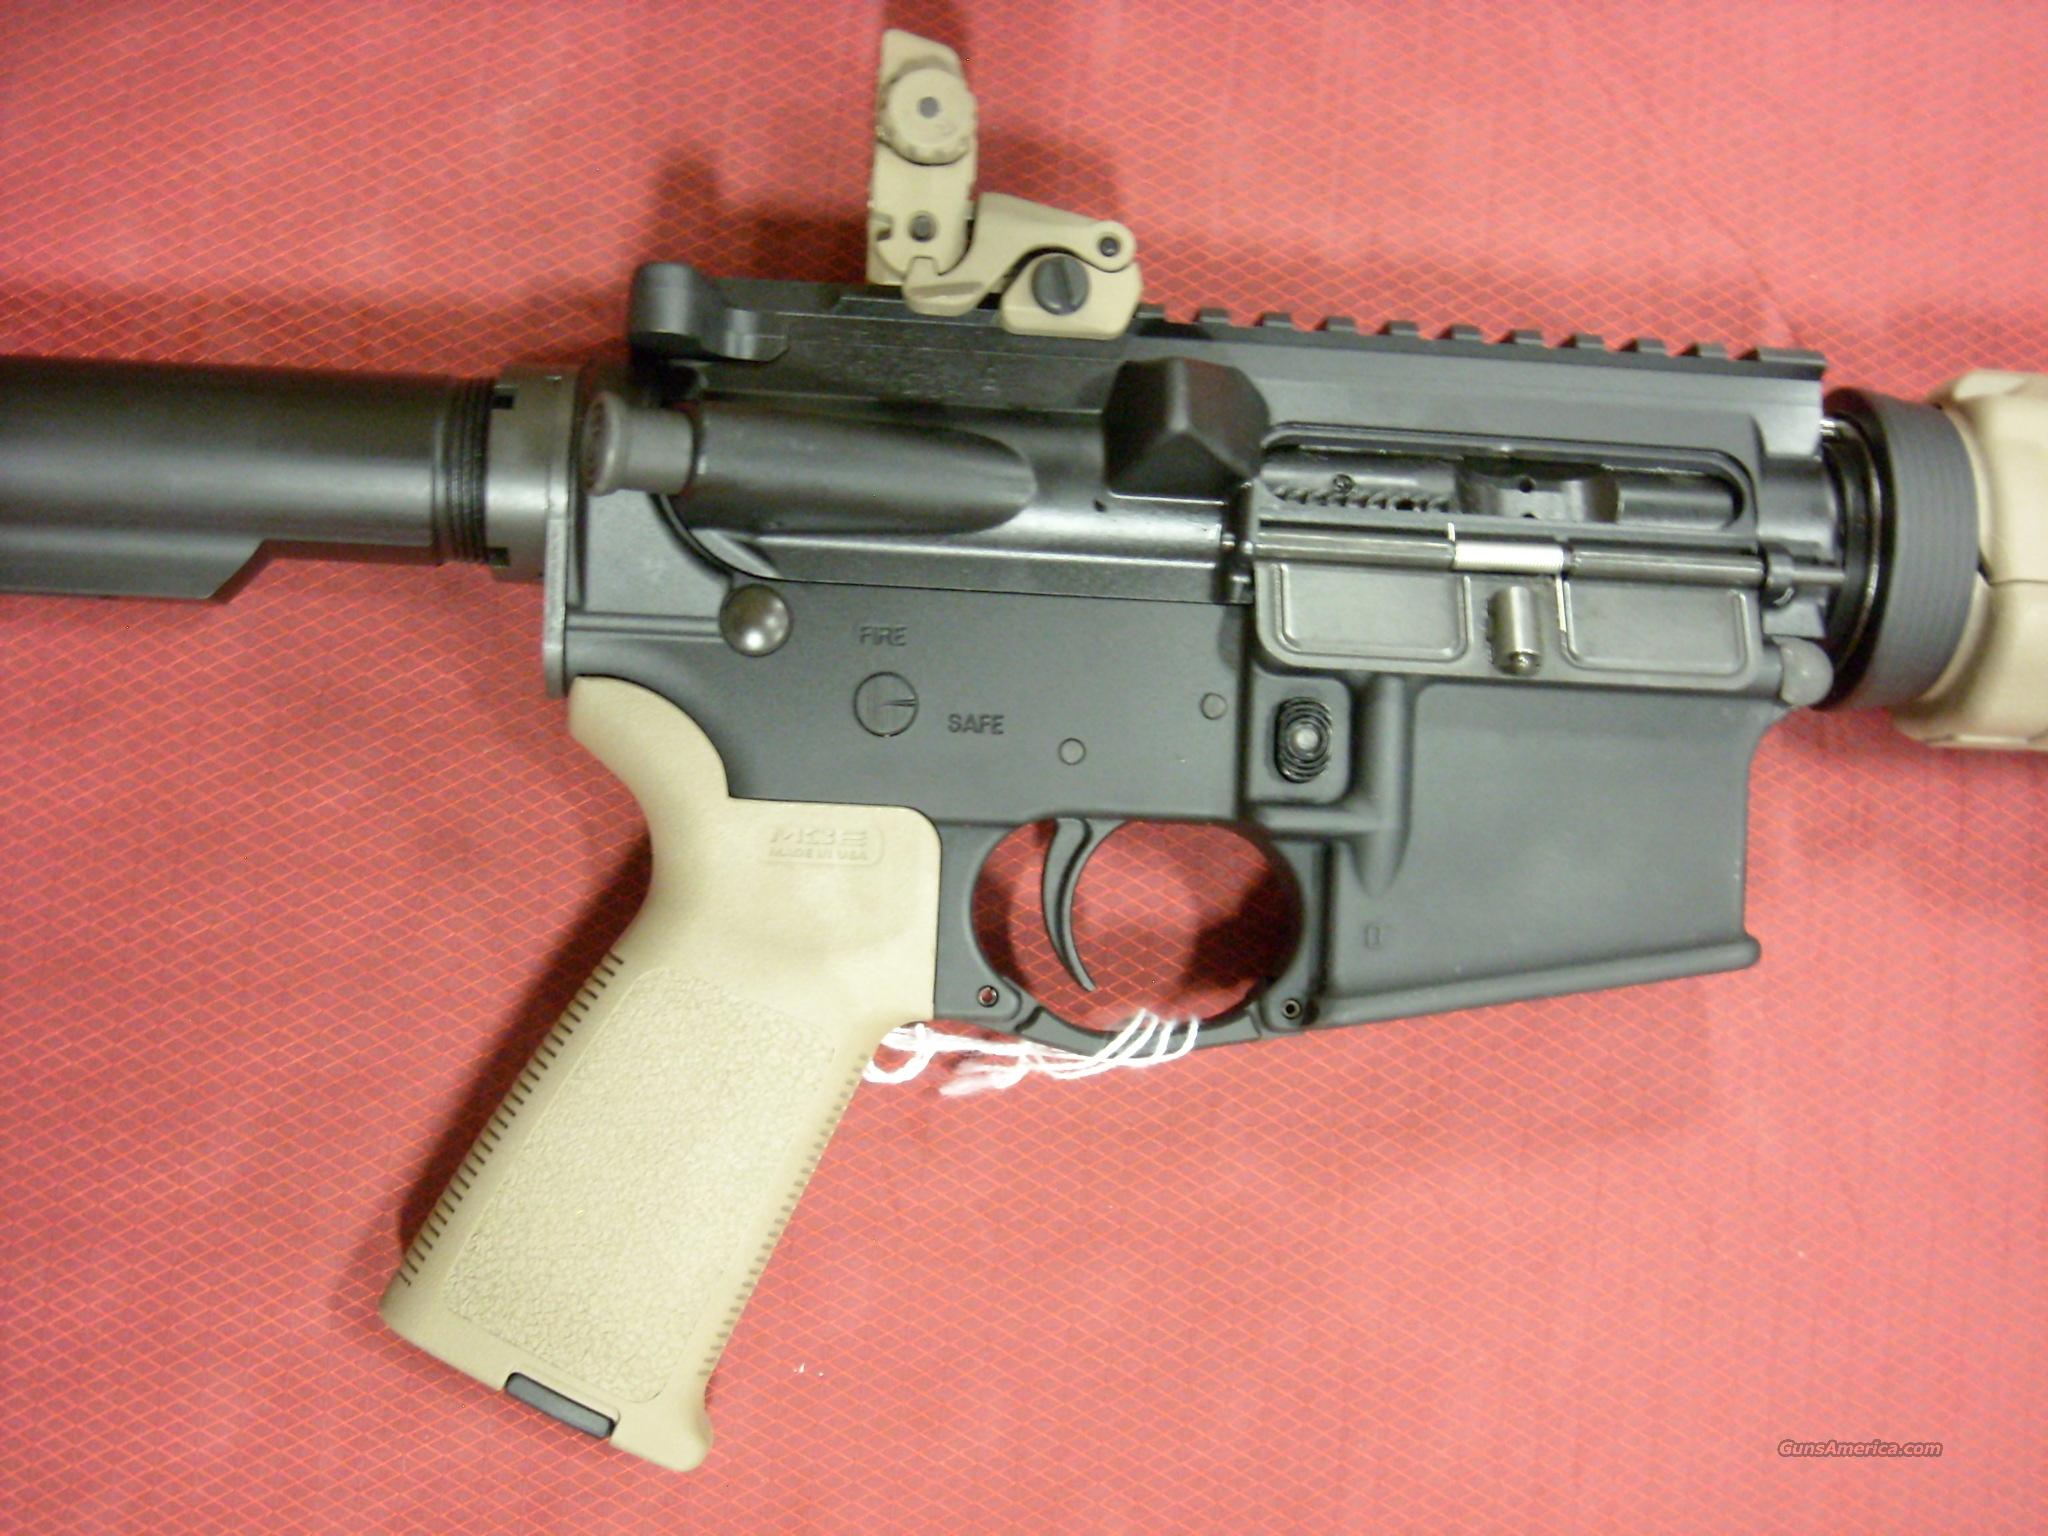 Bushmaster Moe M4 Type Carbine 223 For Sale At Gunsamerica Com